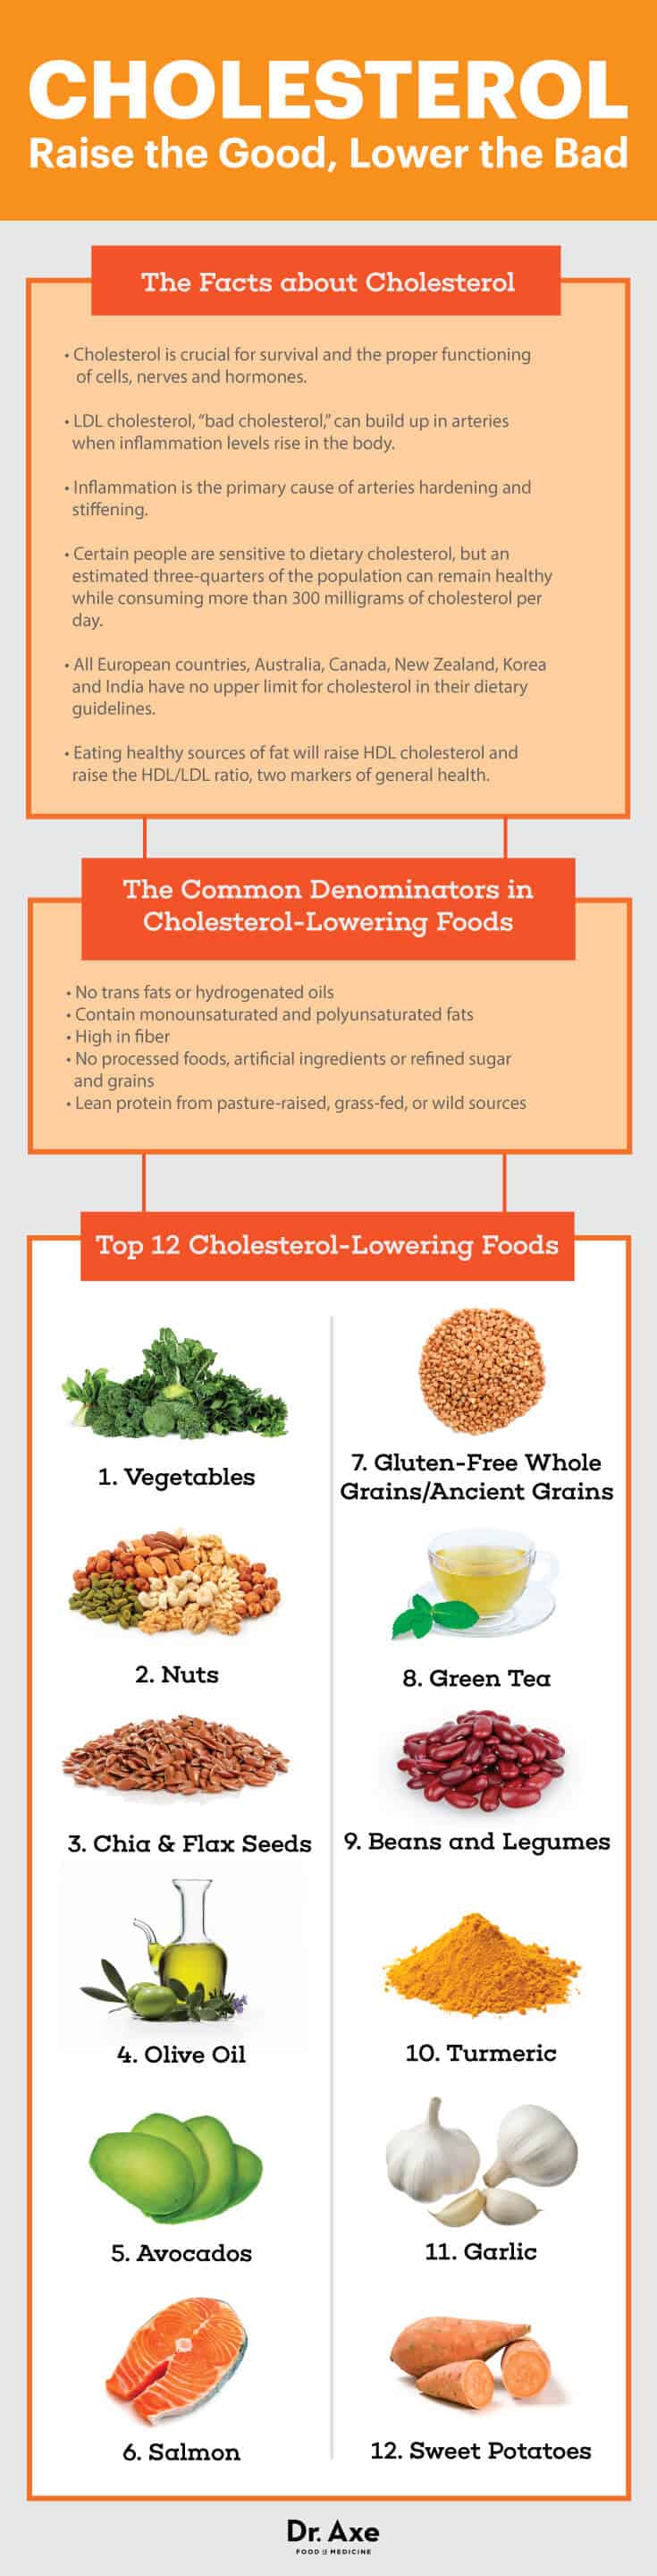 Top 12 Cholesterol-Lowering Foods - Dr. Axe